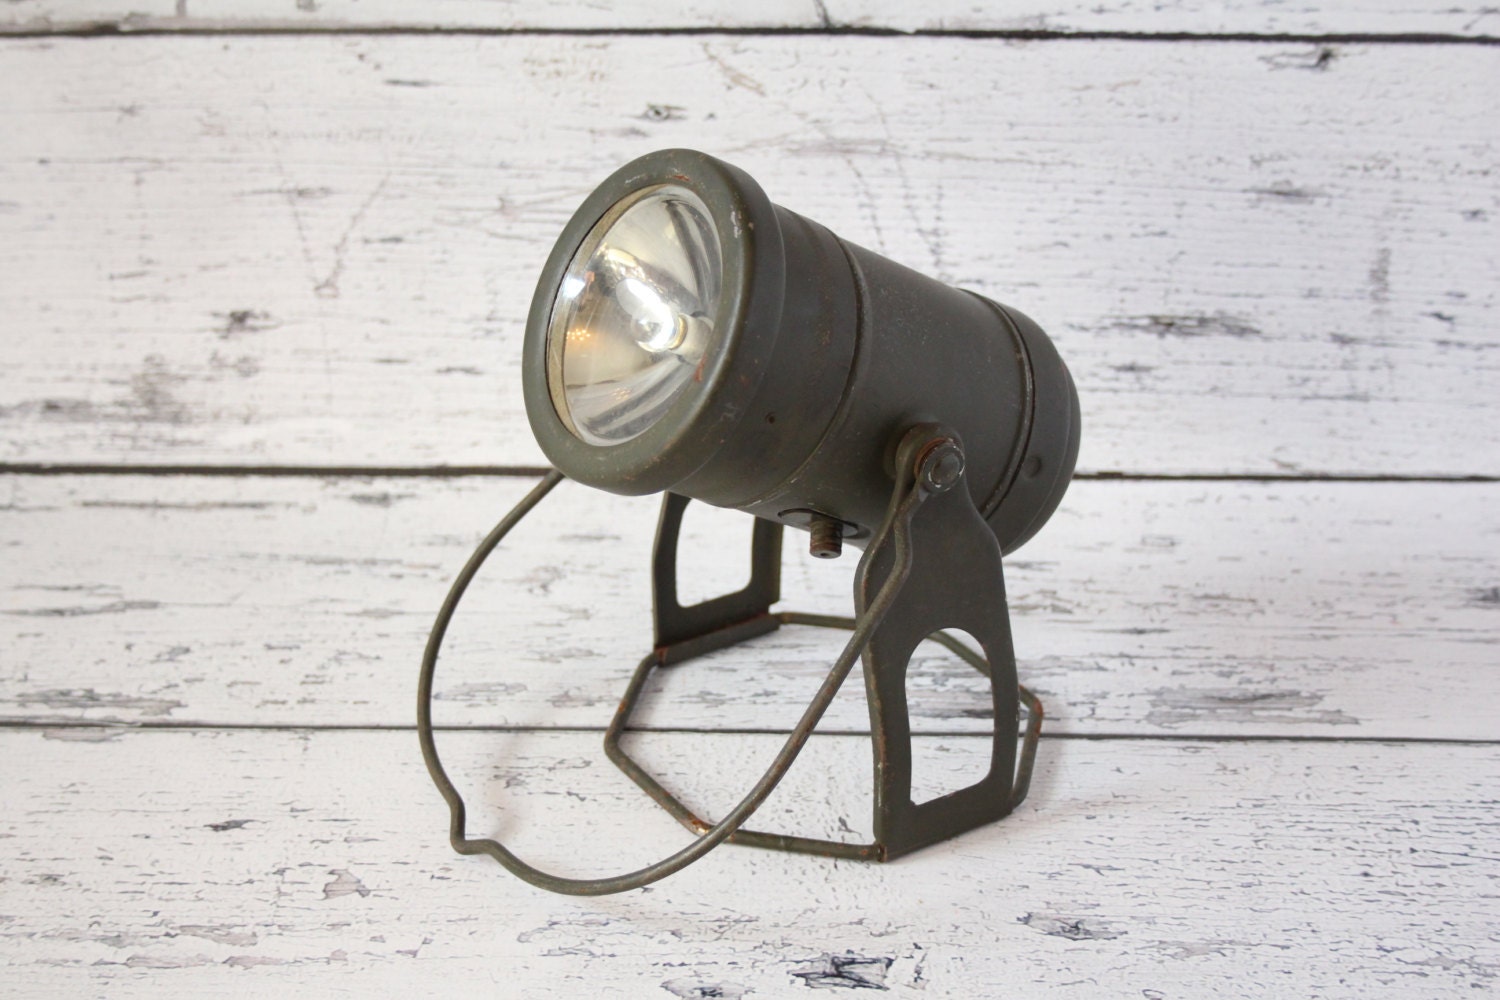 Vintage Miners Light, Luminaire, Light Stick, Model 2105-4, Lantern,  Battery Operated, Flashlight, Justrite -  Singapore